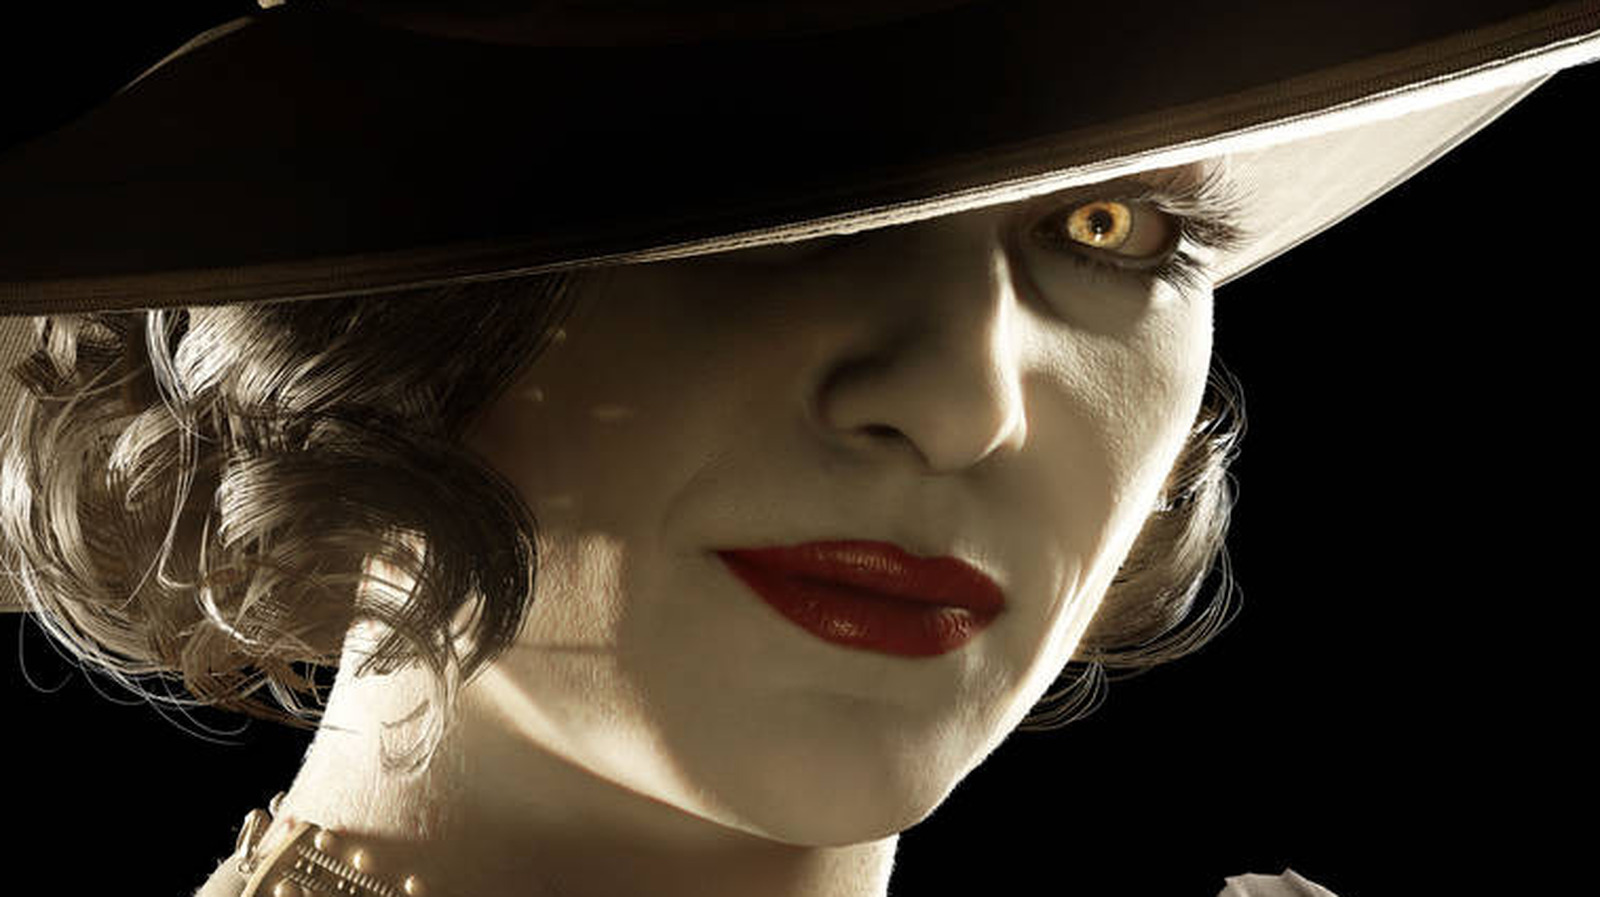 Resident Evil Village DLC trailer shows off playable Lady Dimitrescu